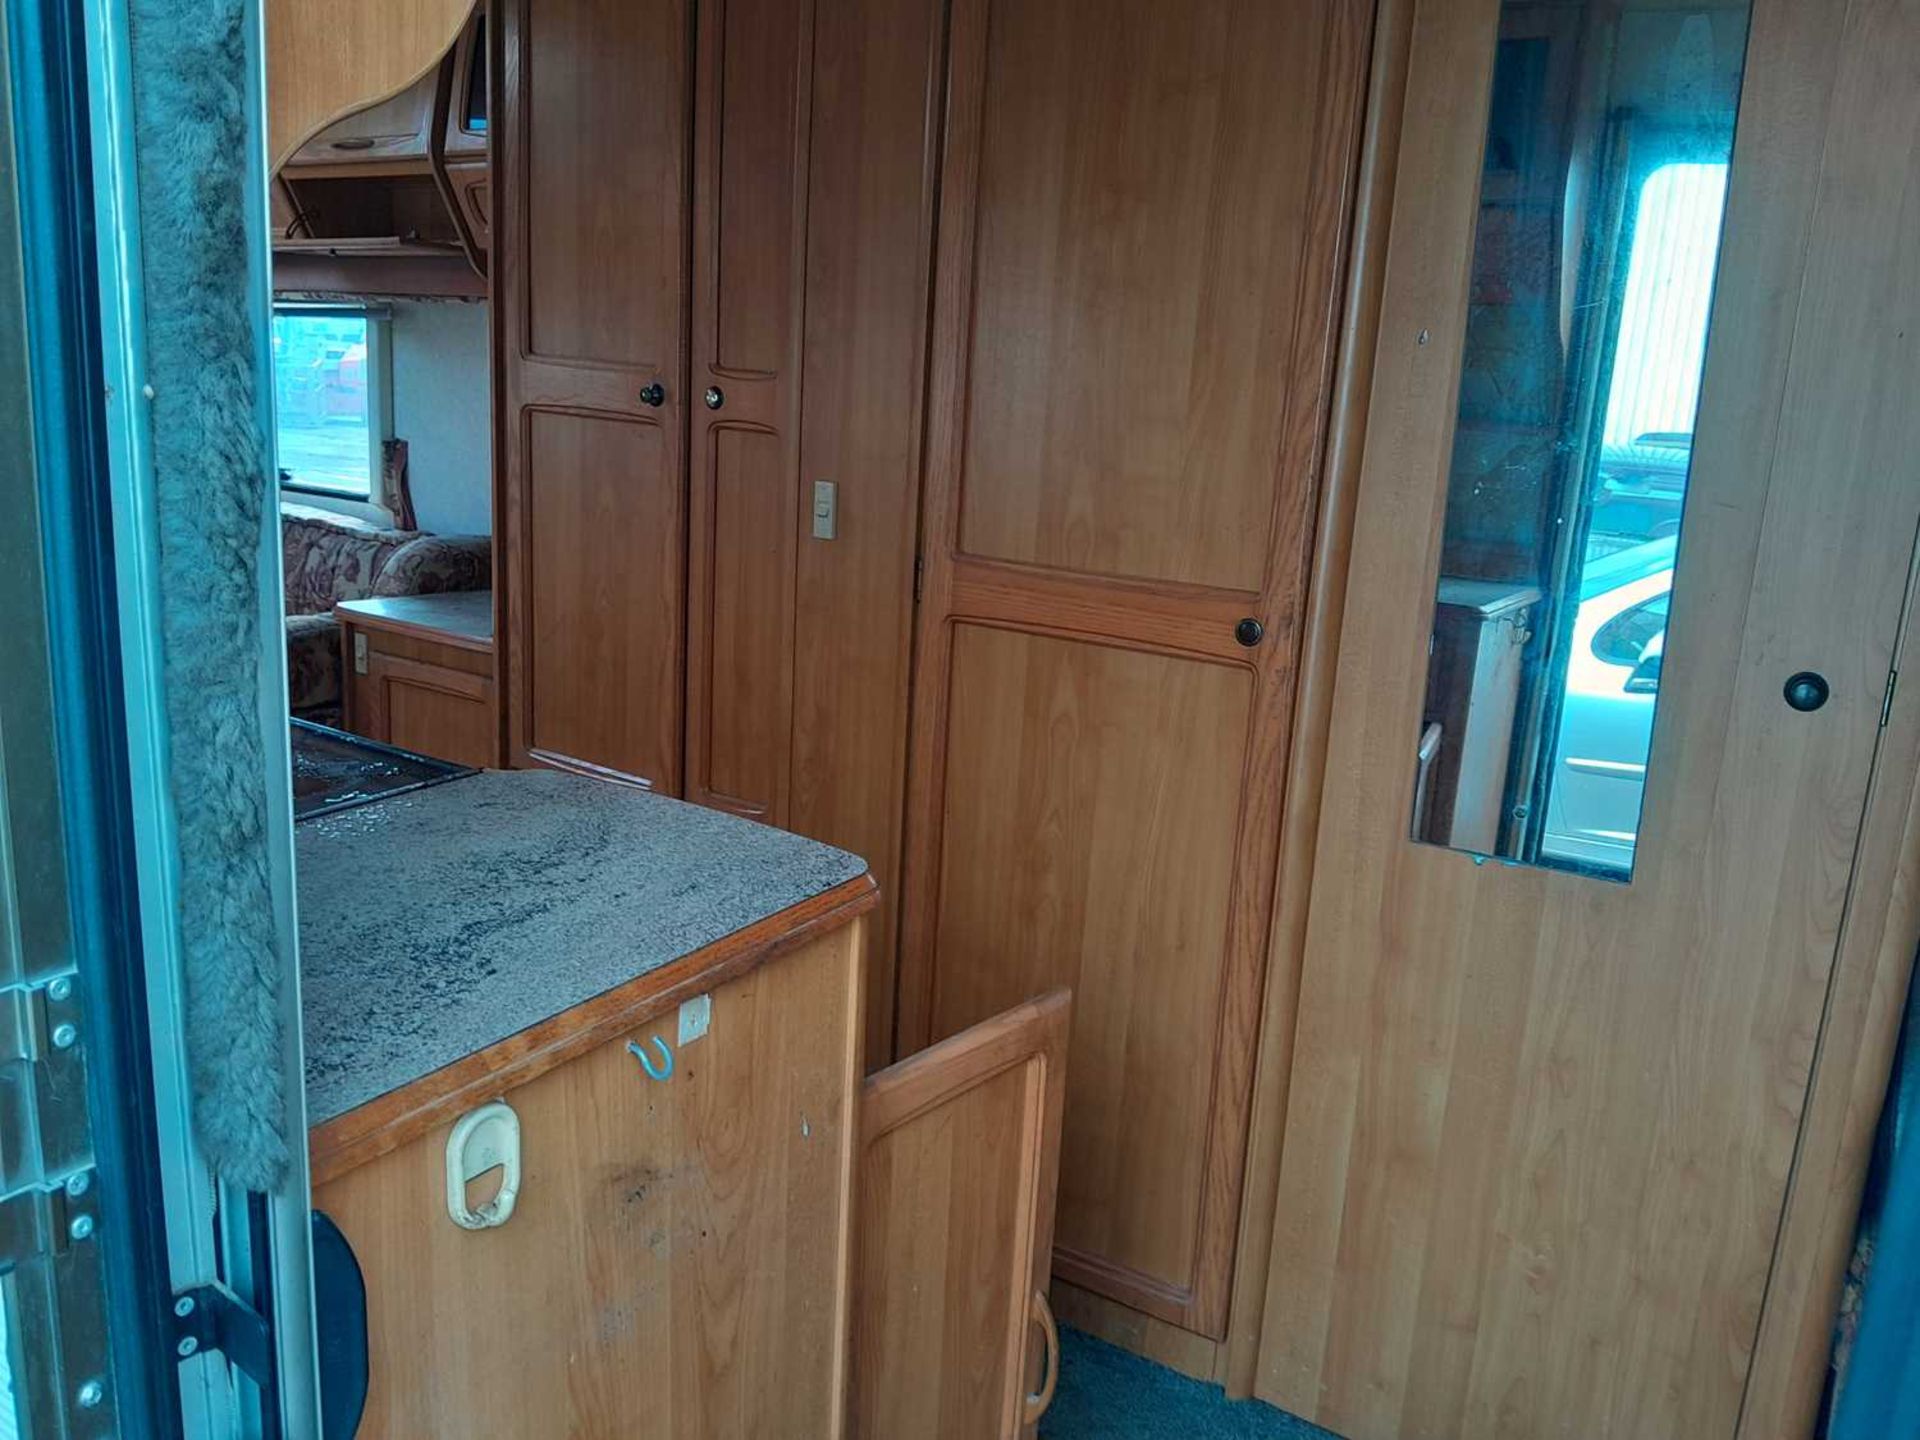 Coachman LASER 590/5 Twin Axle 2 Berth Caravan, Kitchen, Lounge, Toilet - Image 7 of 15